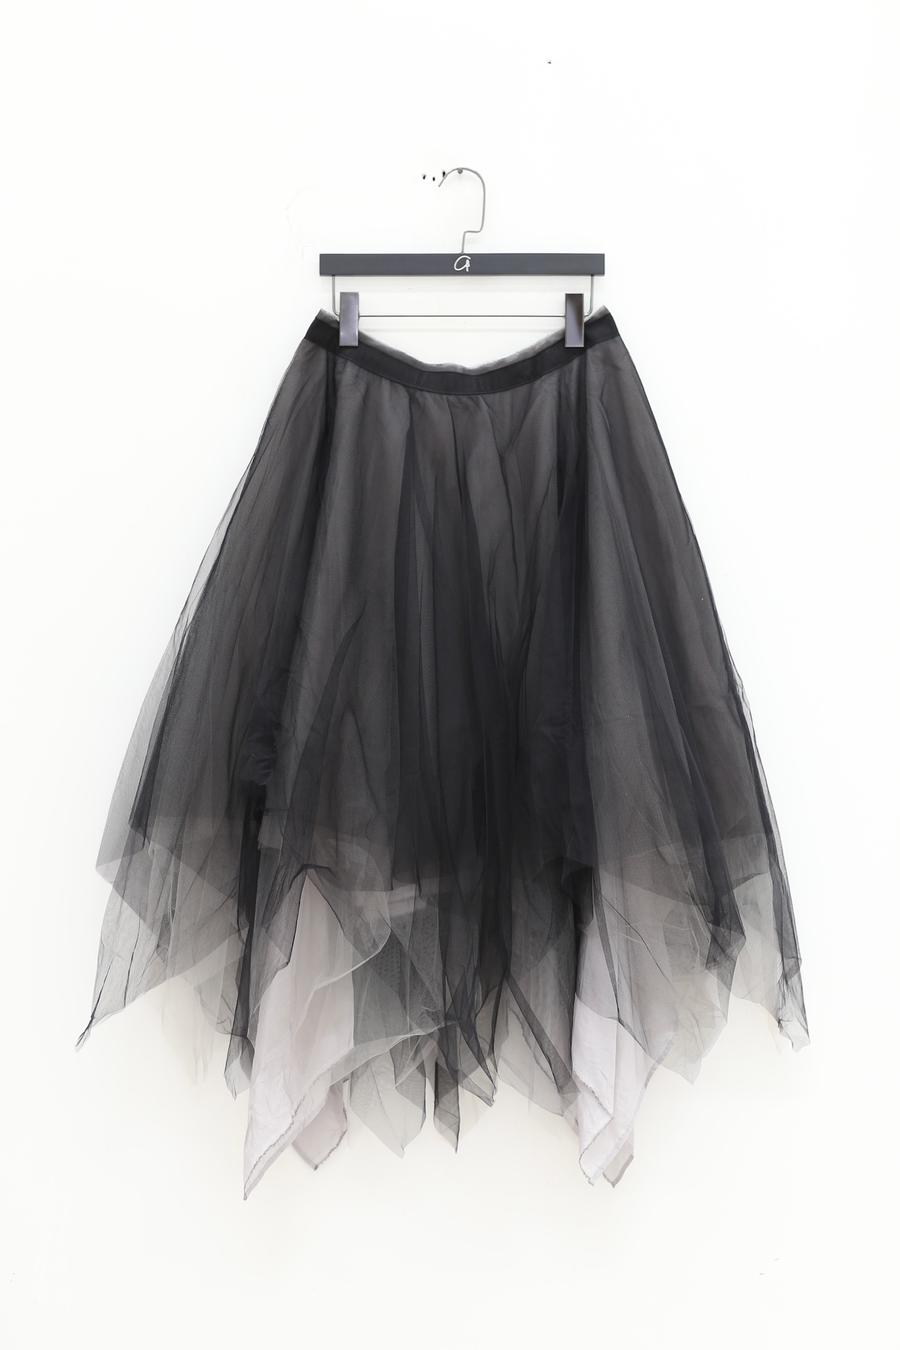 Contrast color inner gloss Phyllis short tulle skirt black - Shop